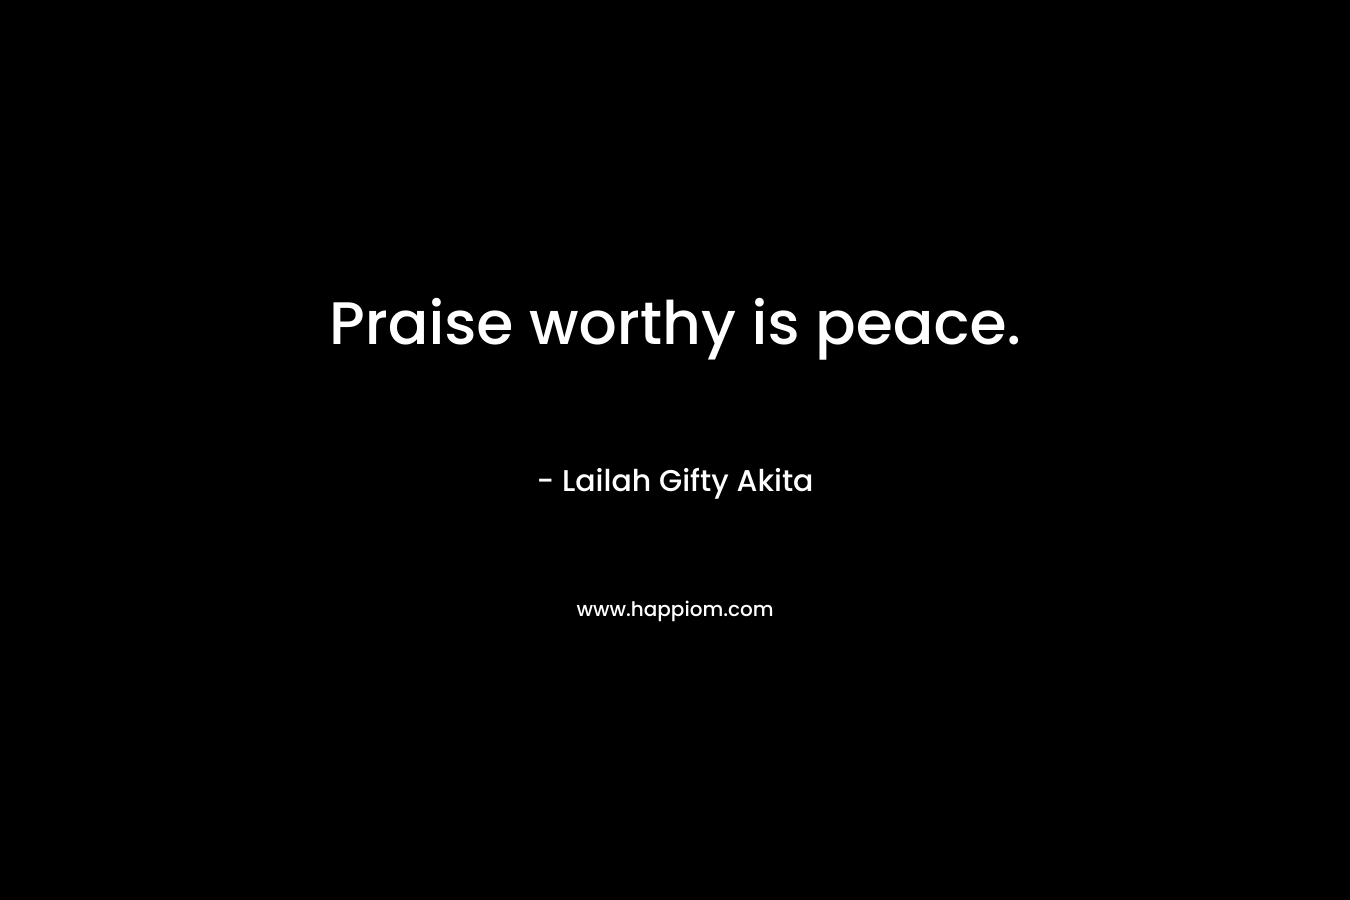 Praise worthy is peace.